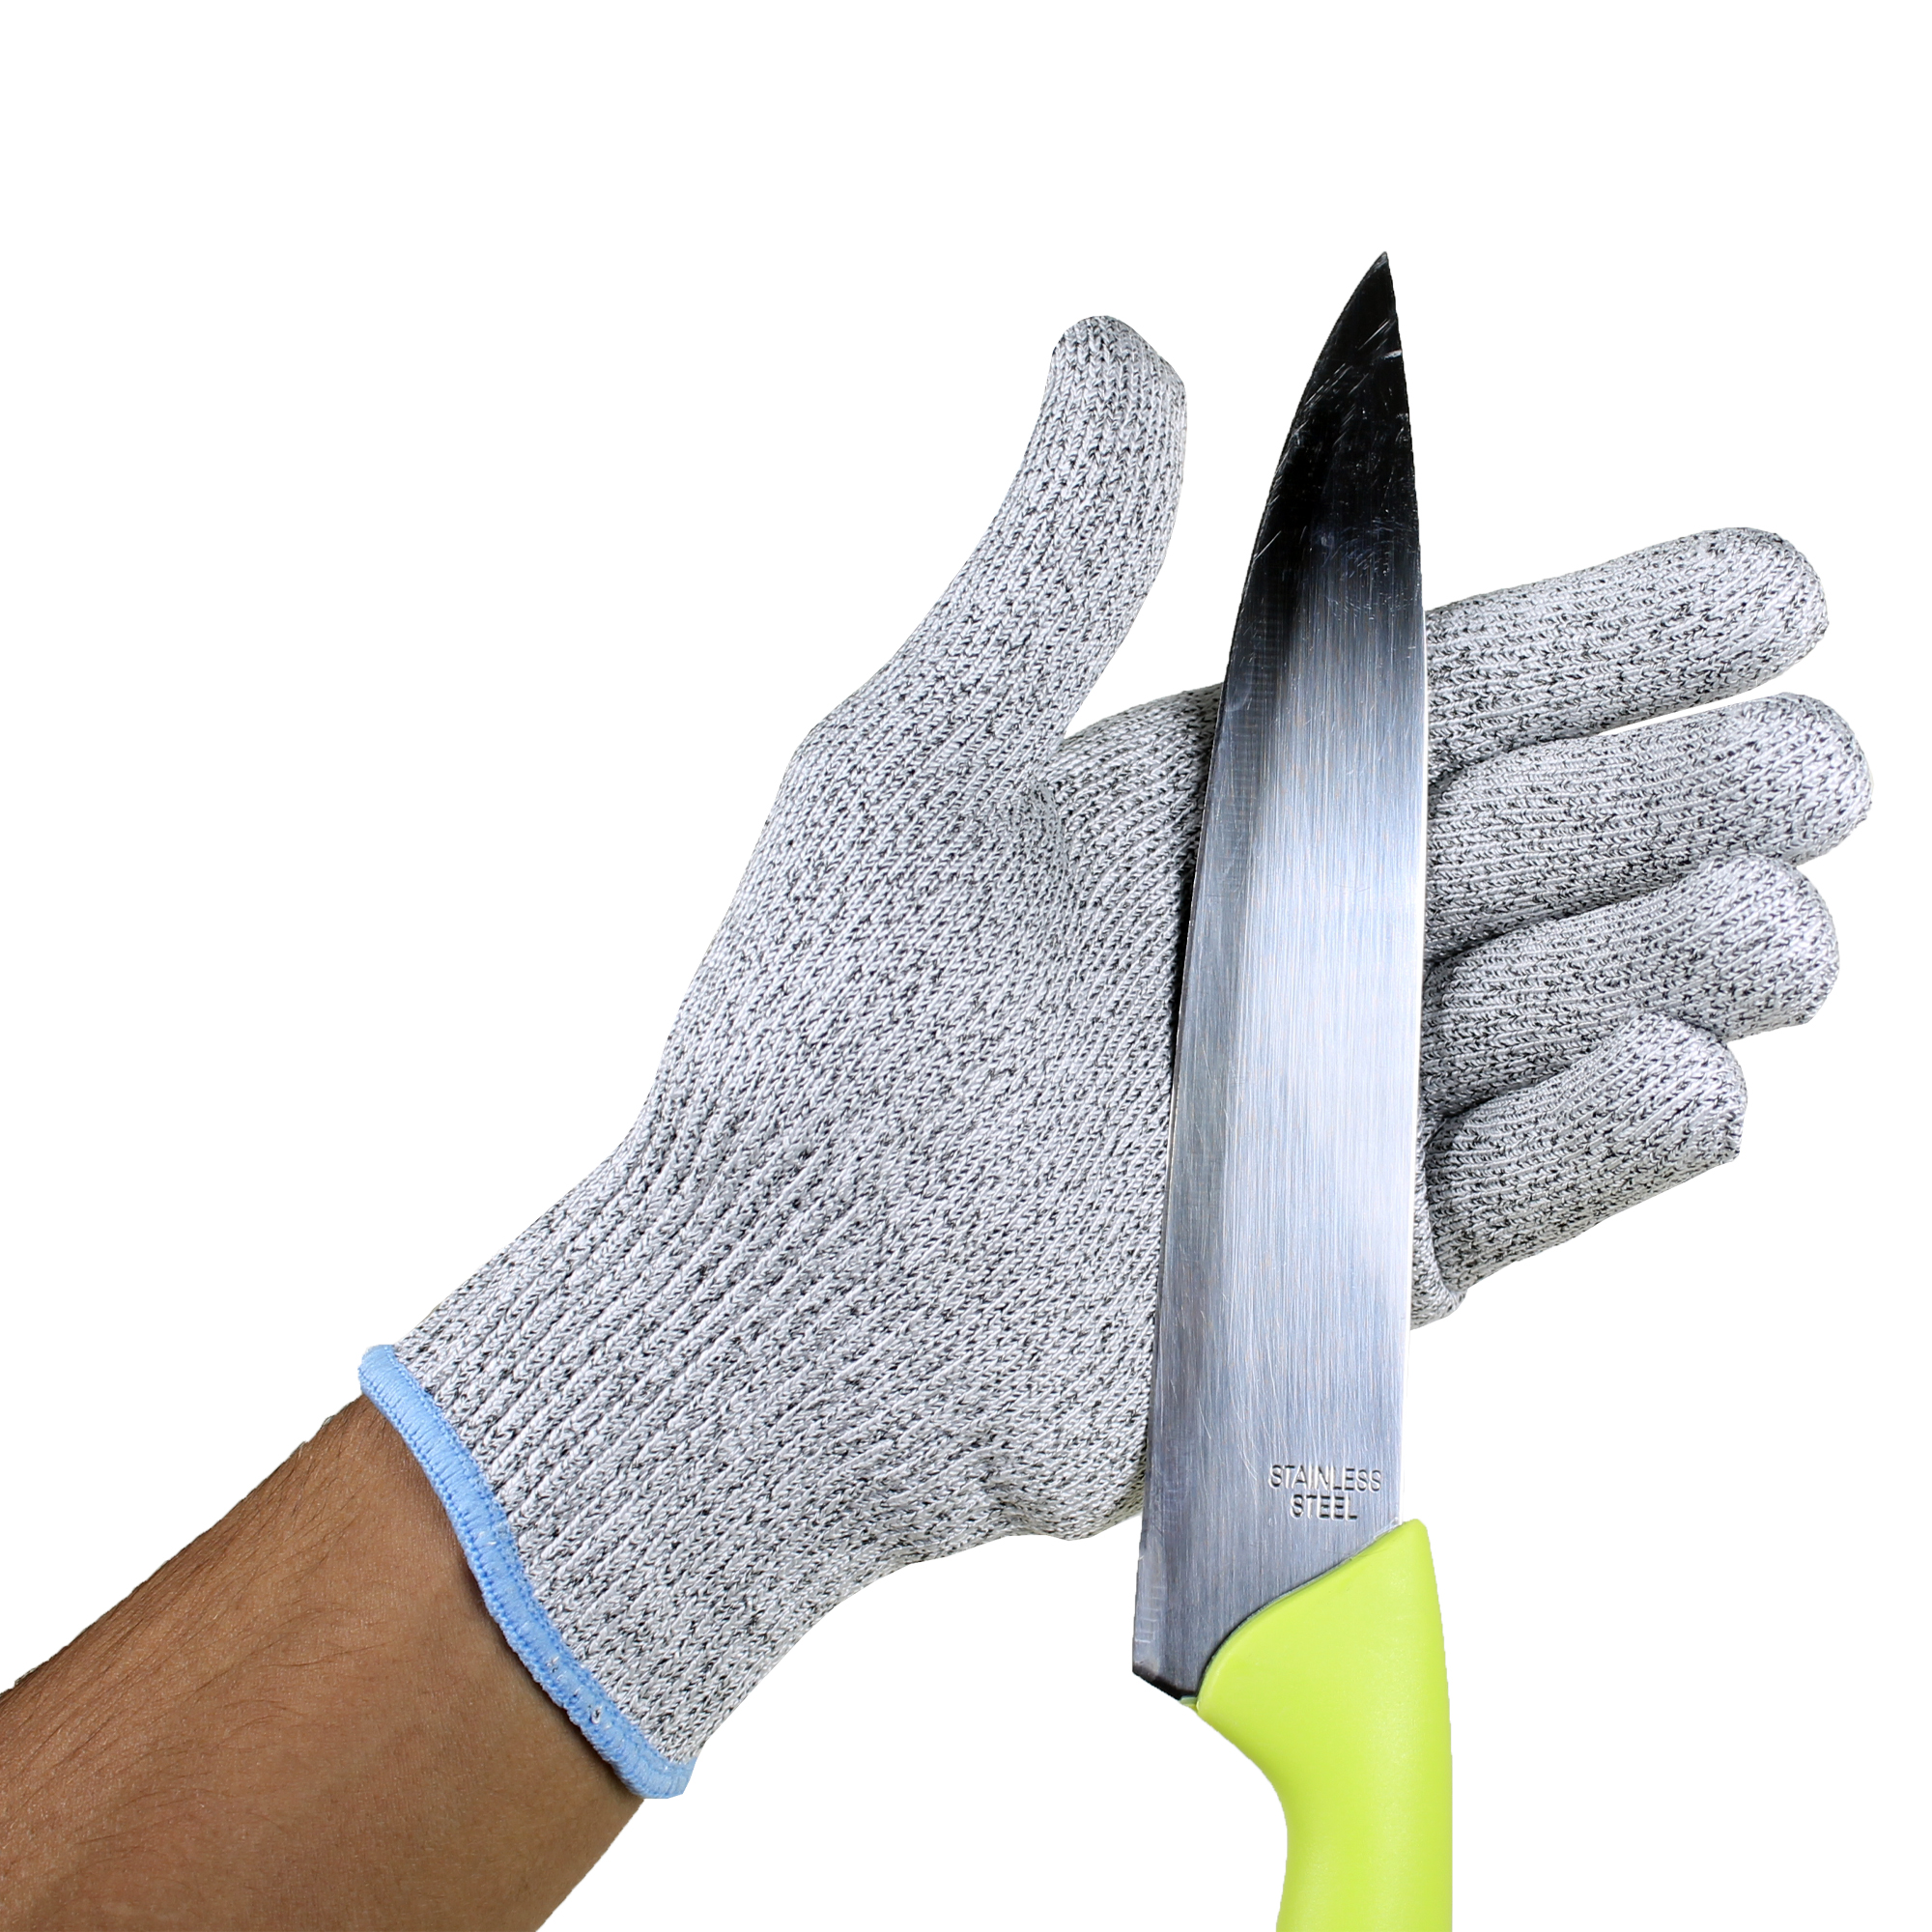 Genius Ideas Par de guantes resistentes a cortes